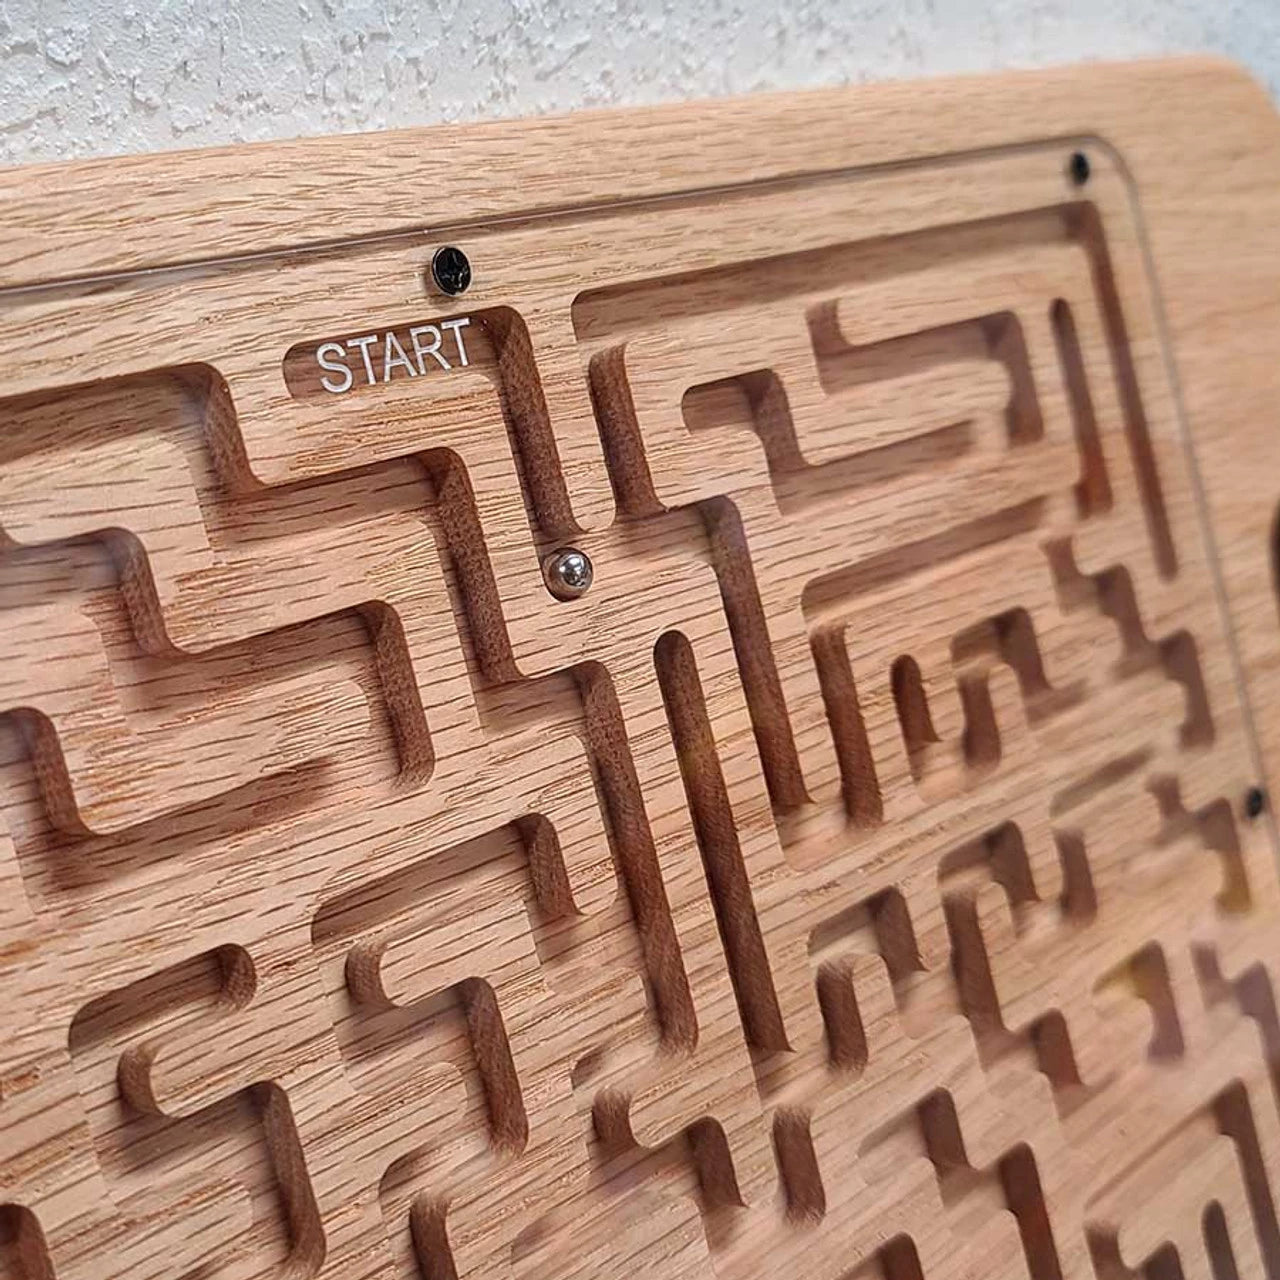 Wooden ball maze made with laser cutter